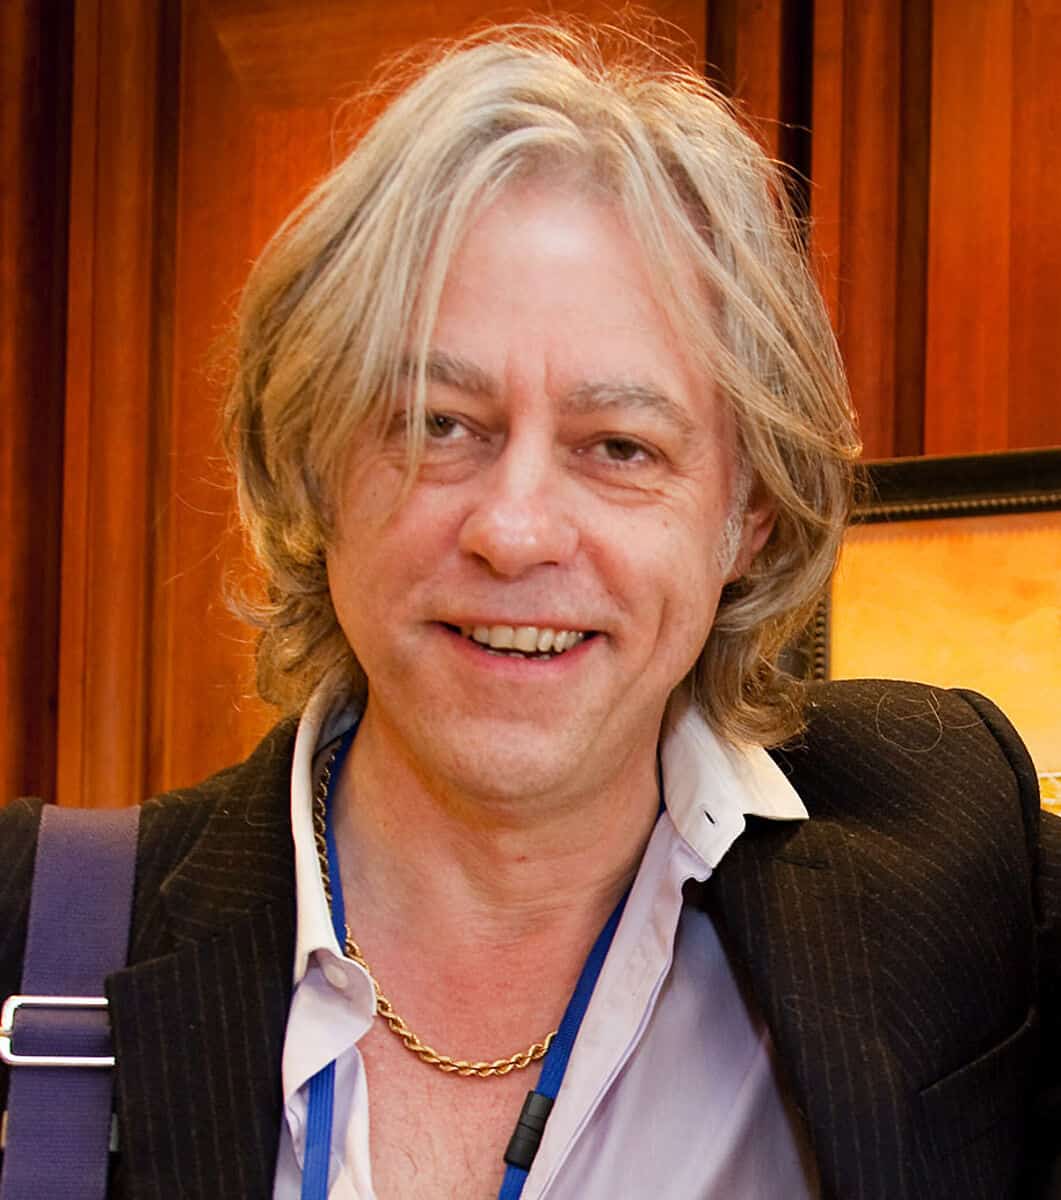 Bob Geldof net worth in Celebrities category